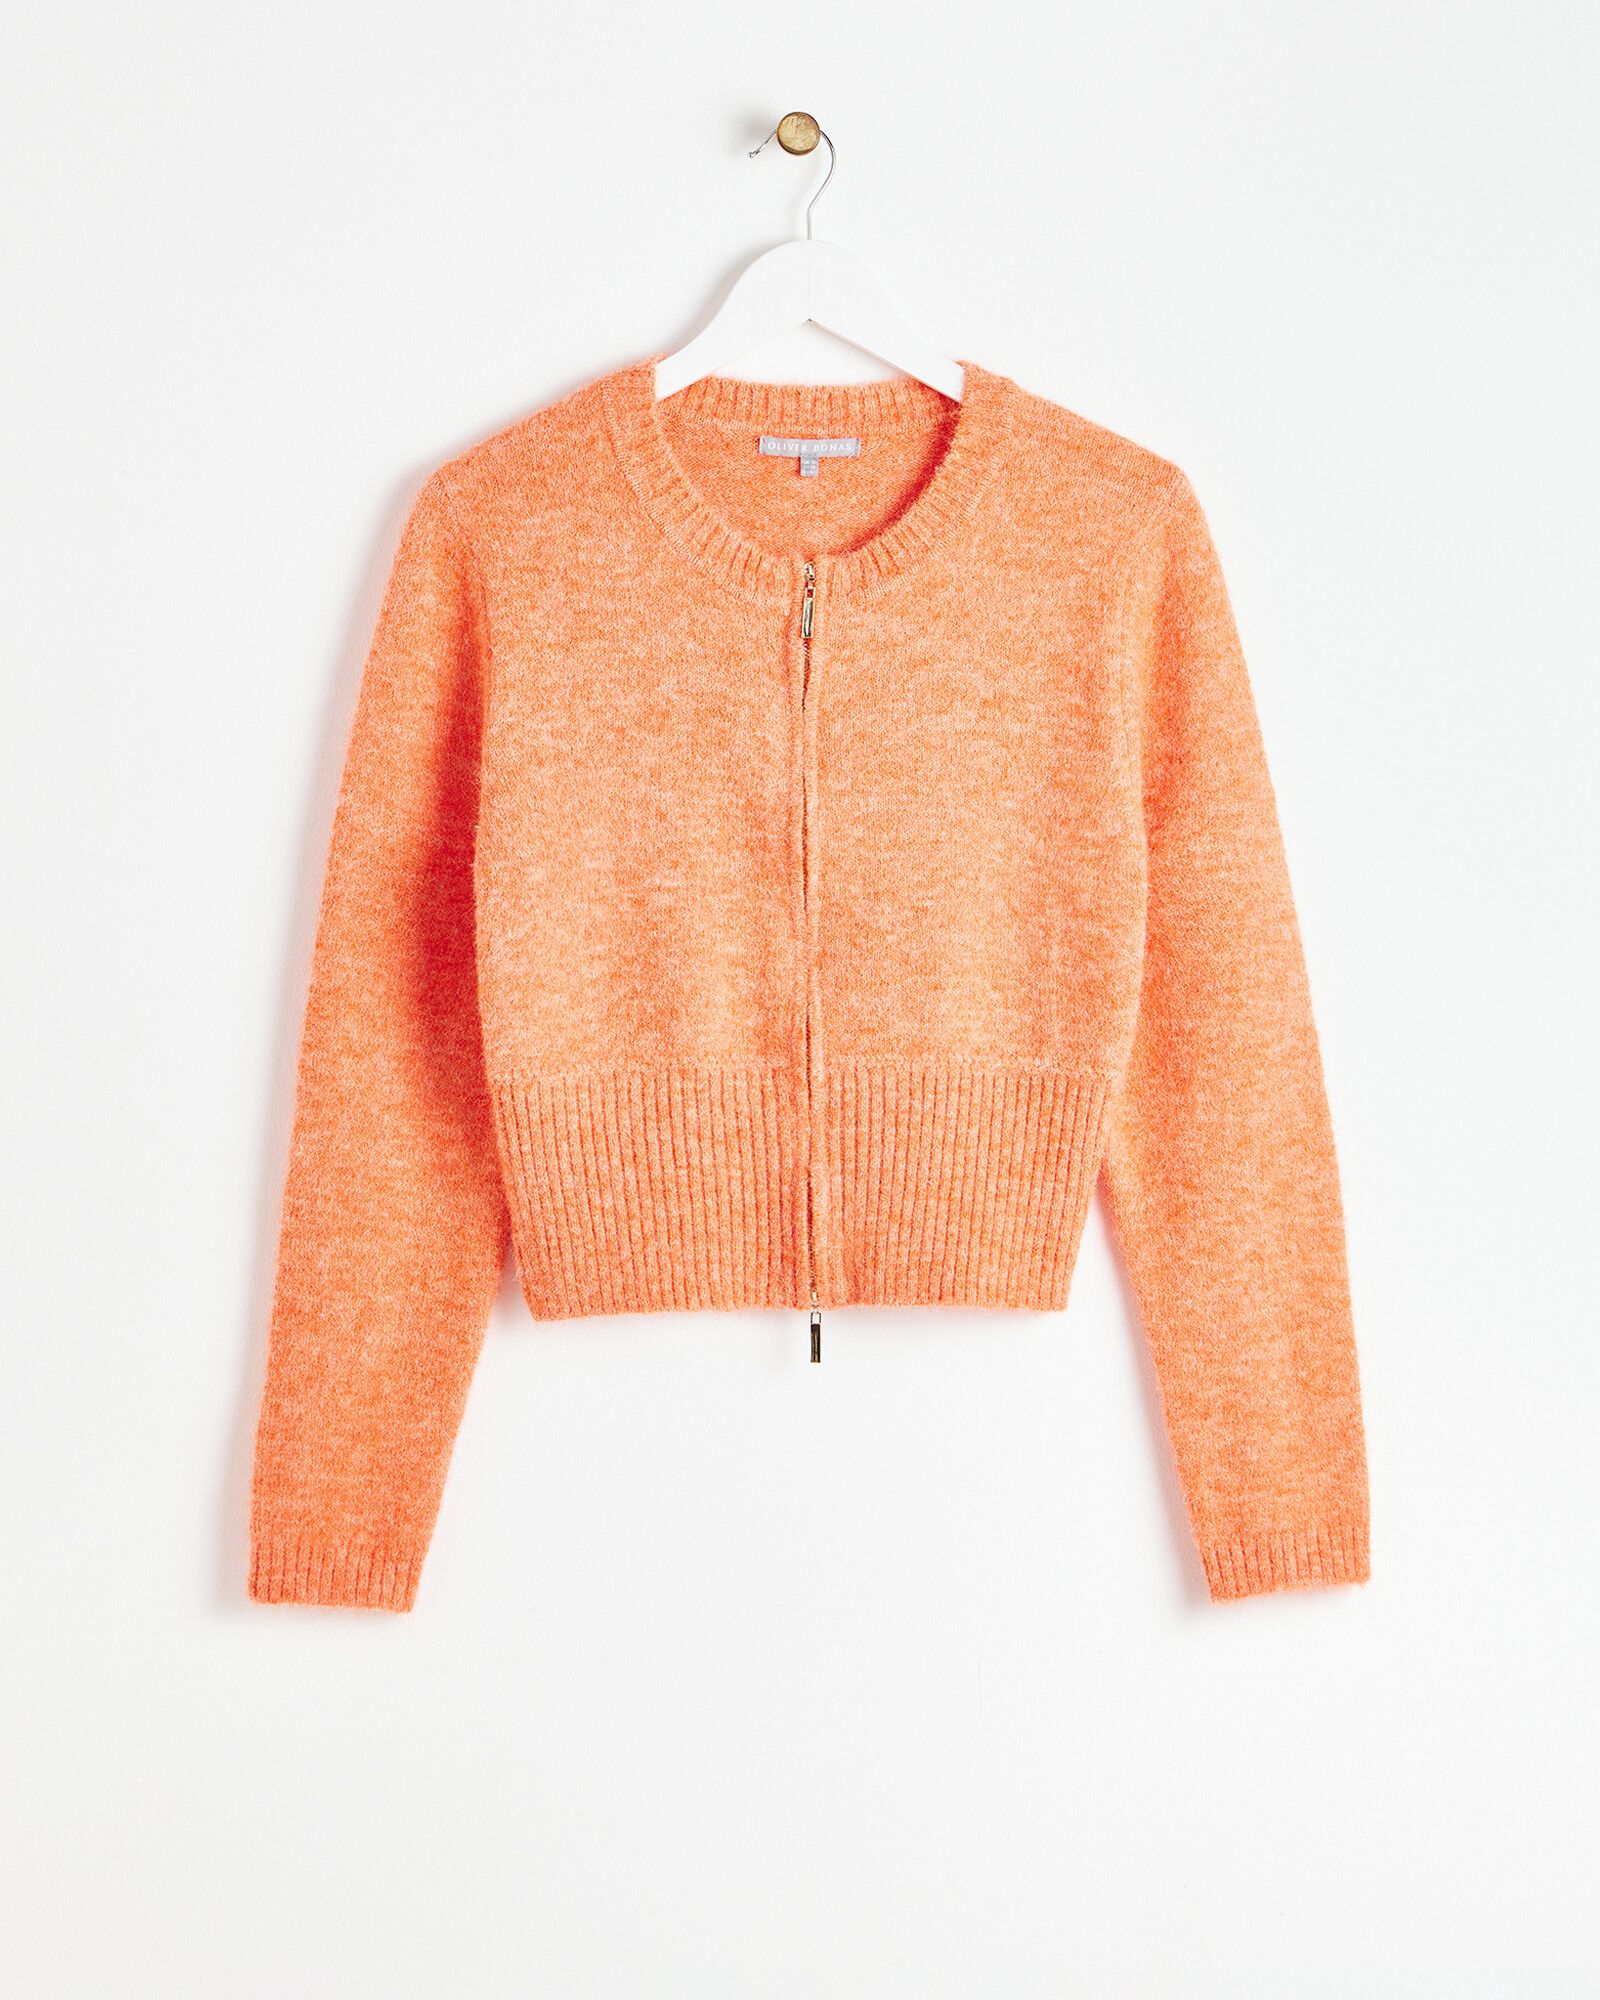 Orange Zip Up Knitted Cardigan